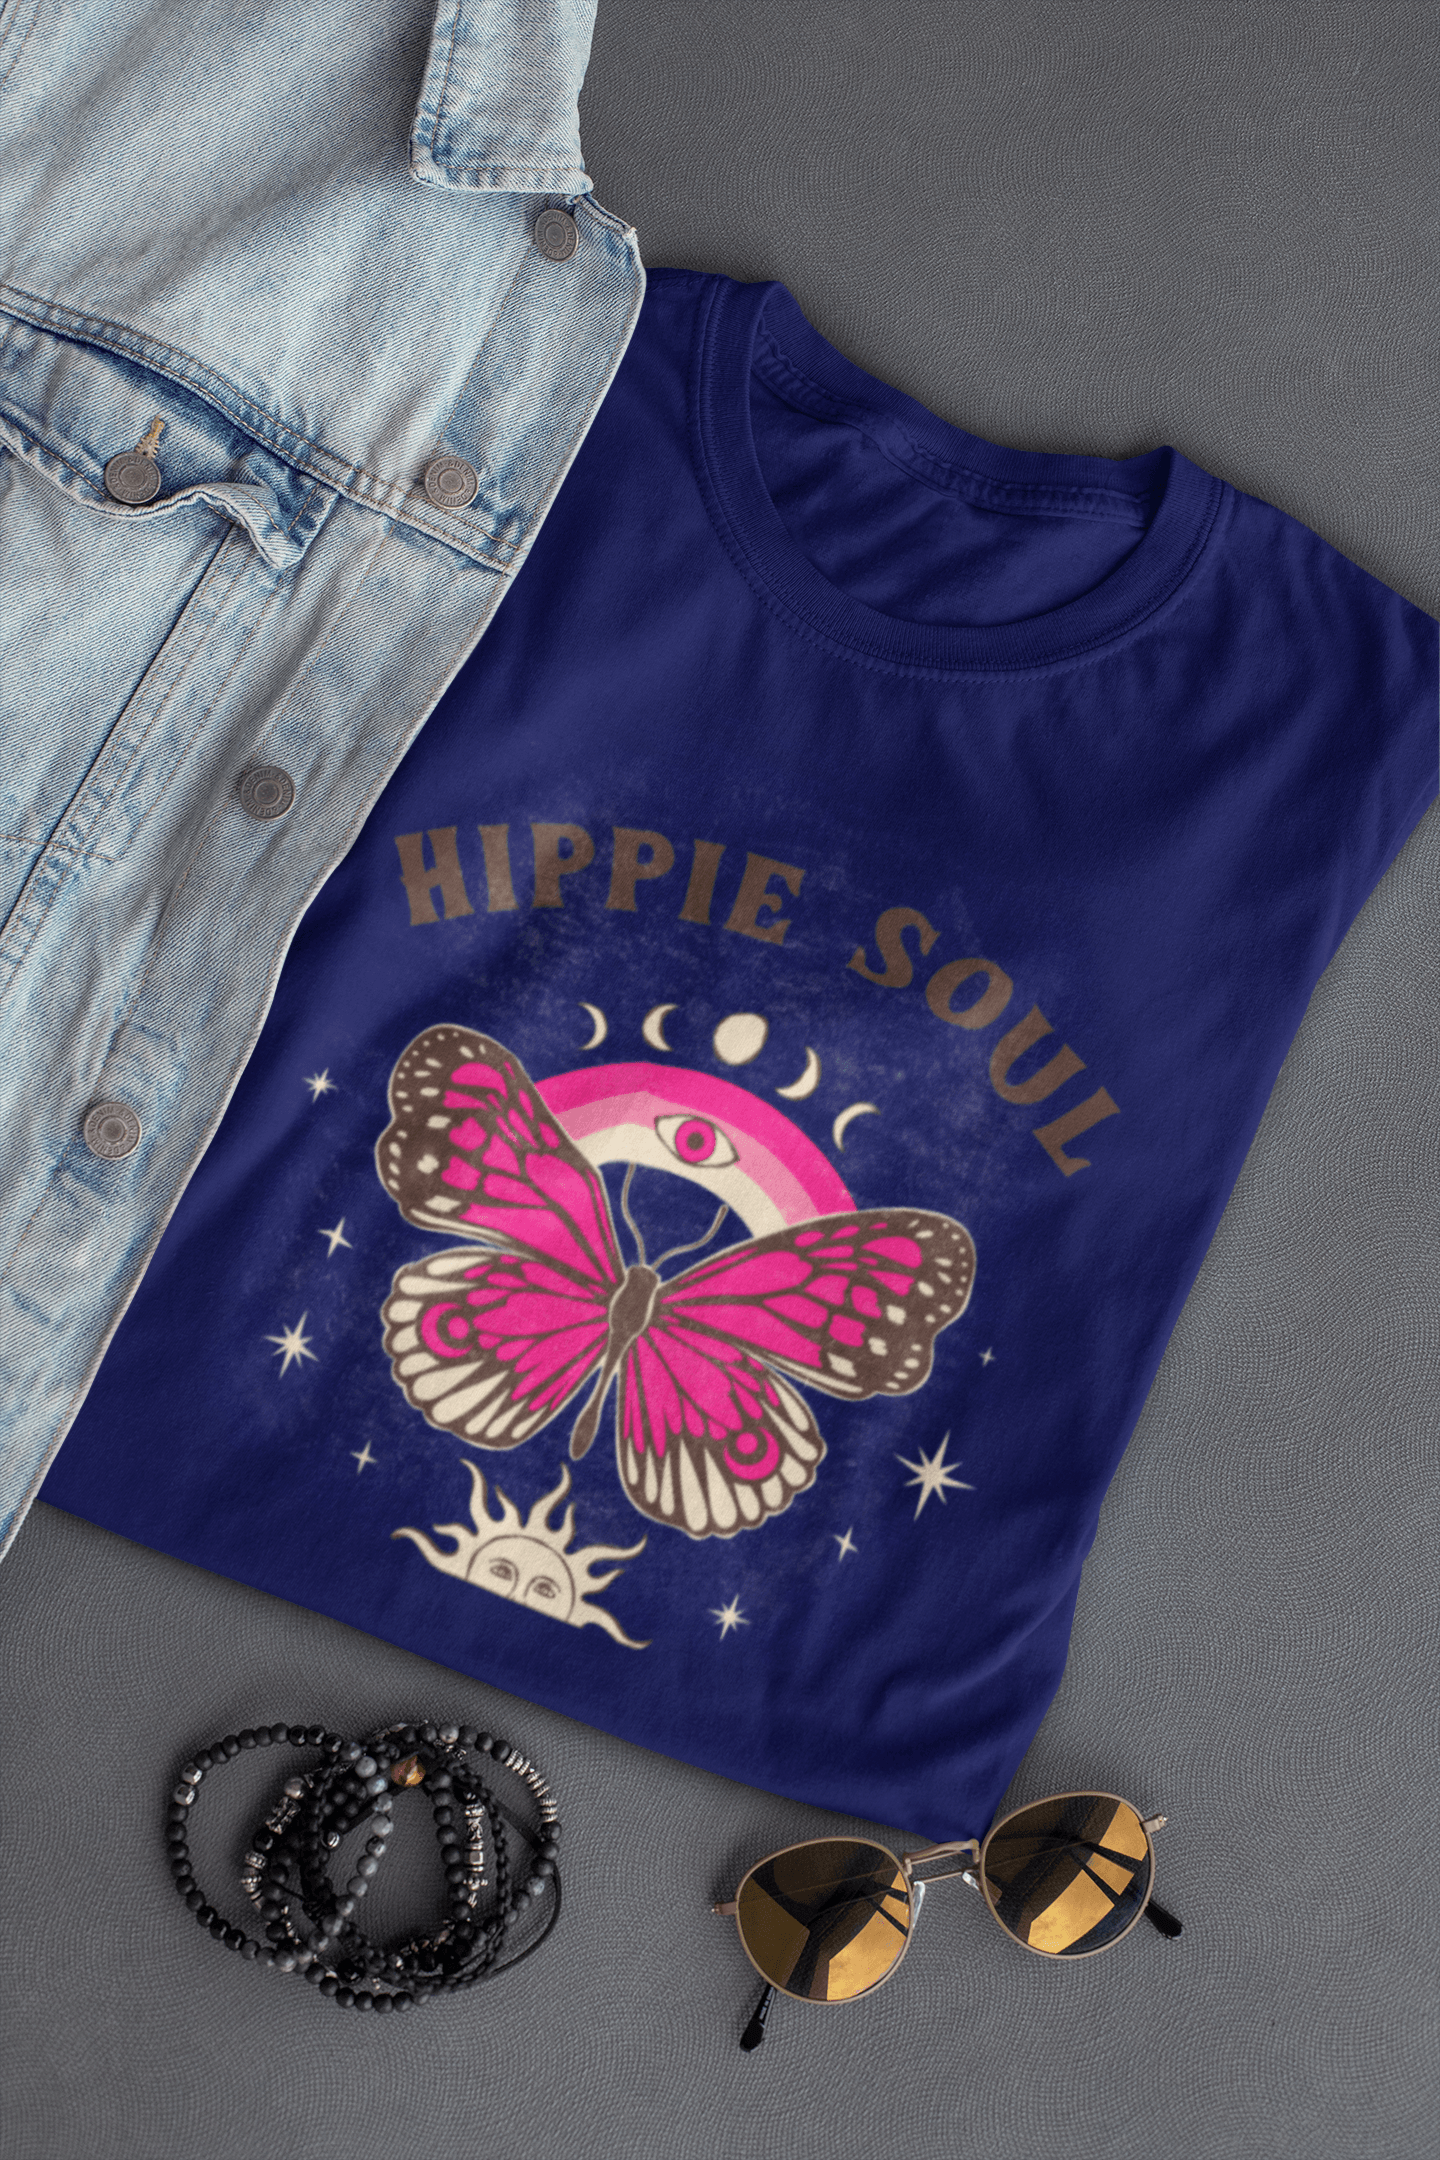 Hippie Soul T-Shirt - The Accessorys Official